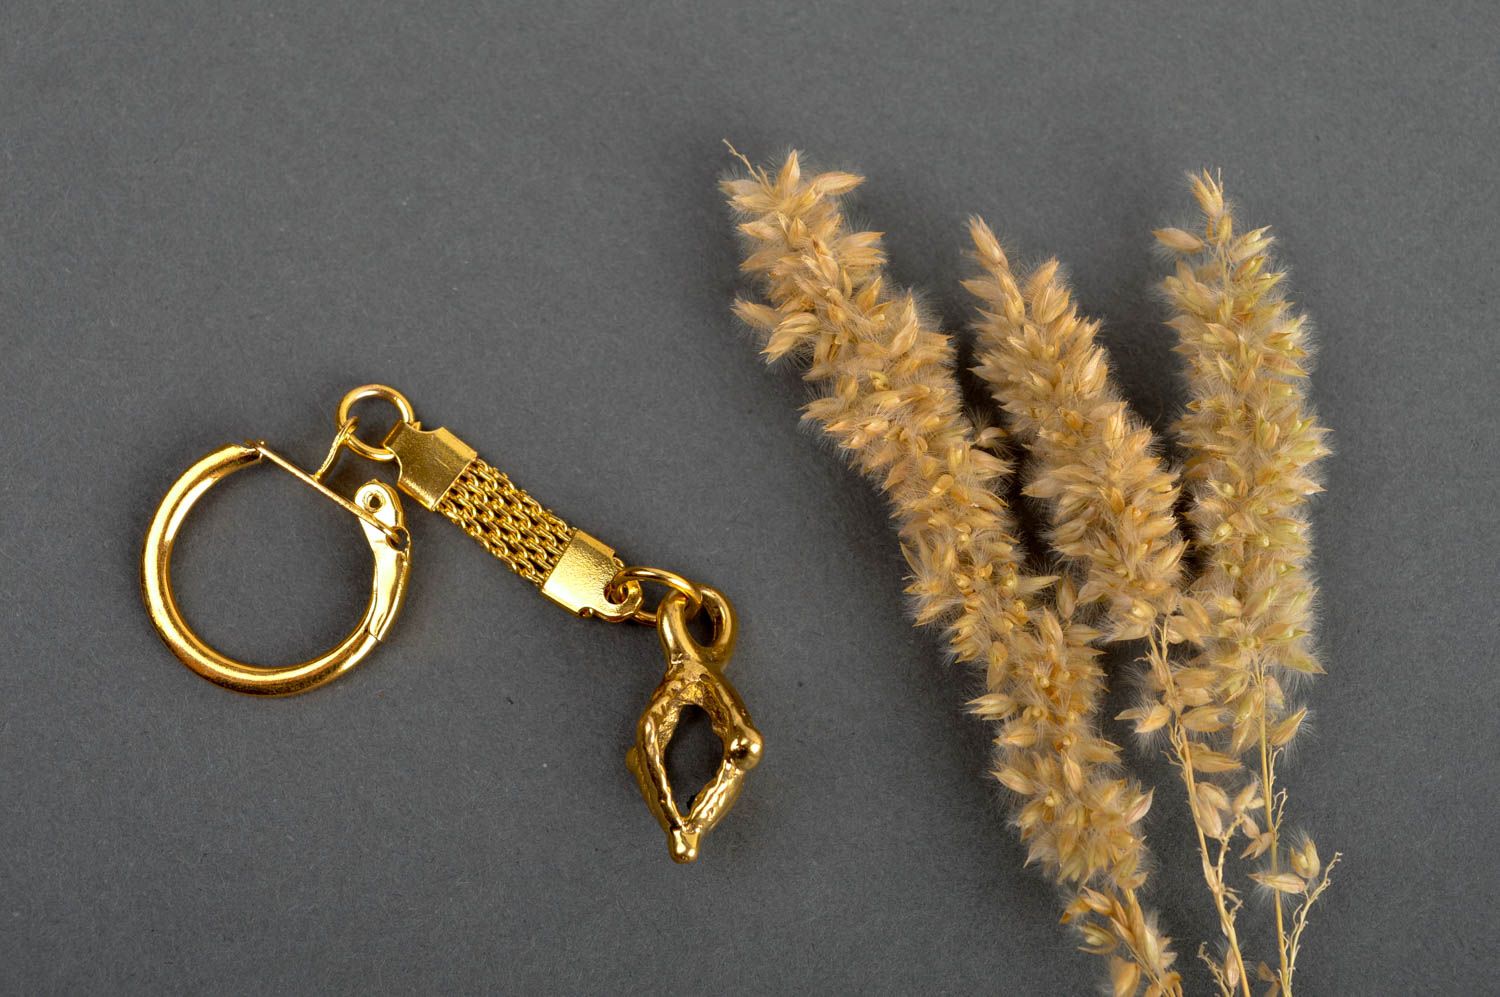 Beautiful handmade metal keychain cool keyrings metal craft handmade accessories photo 1